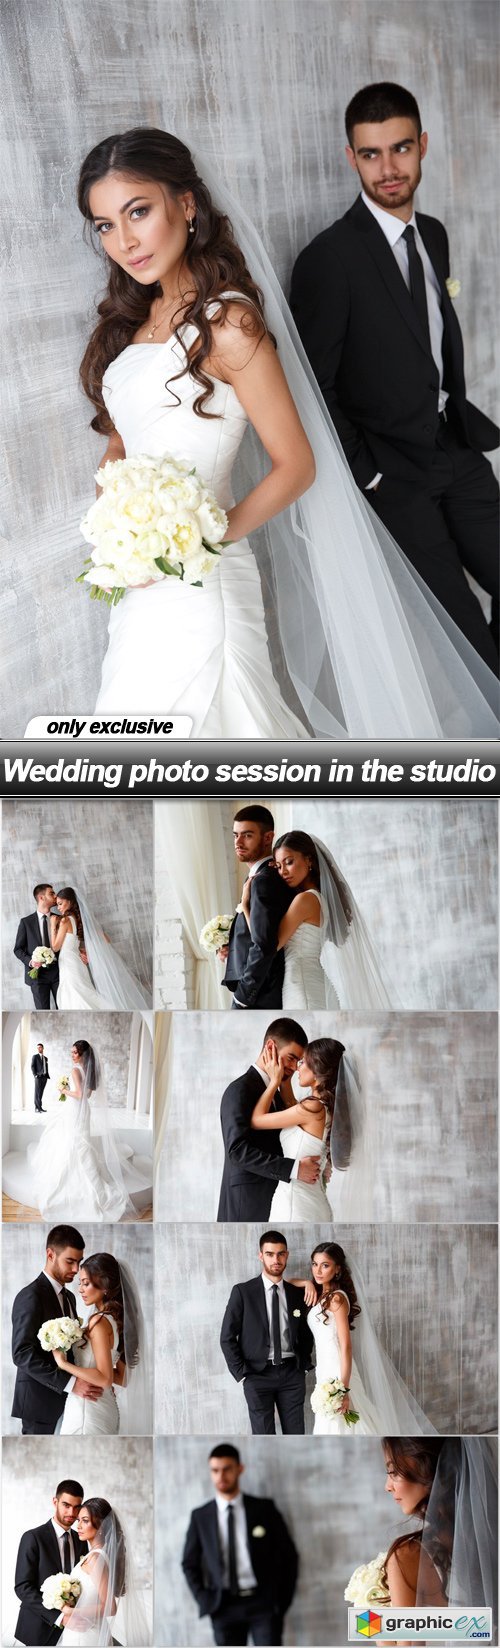 Wedding photo session in the studio - 9 UHQ JPEG